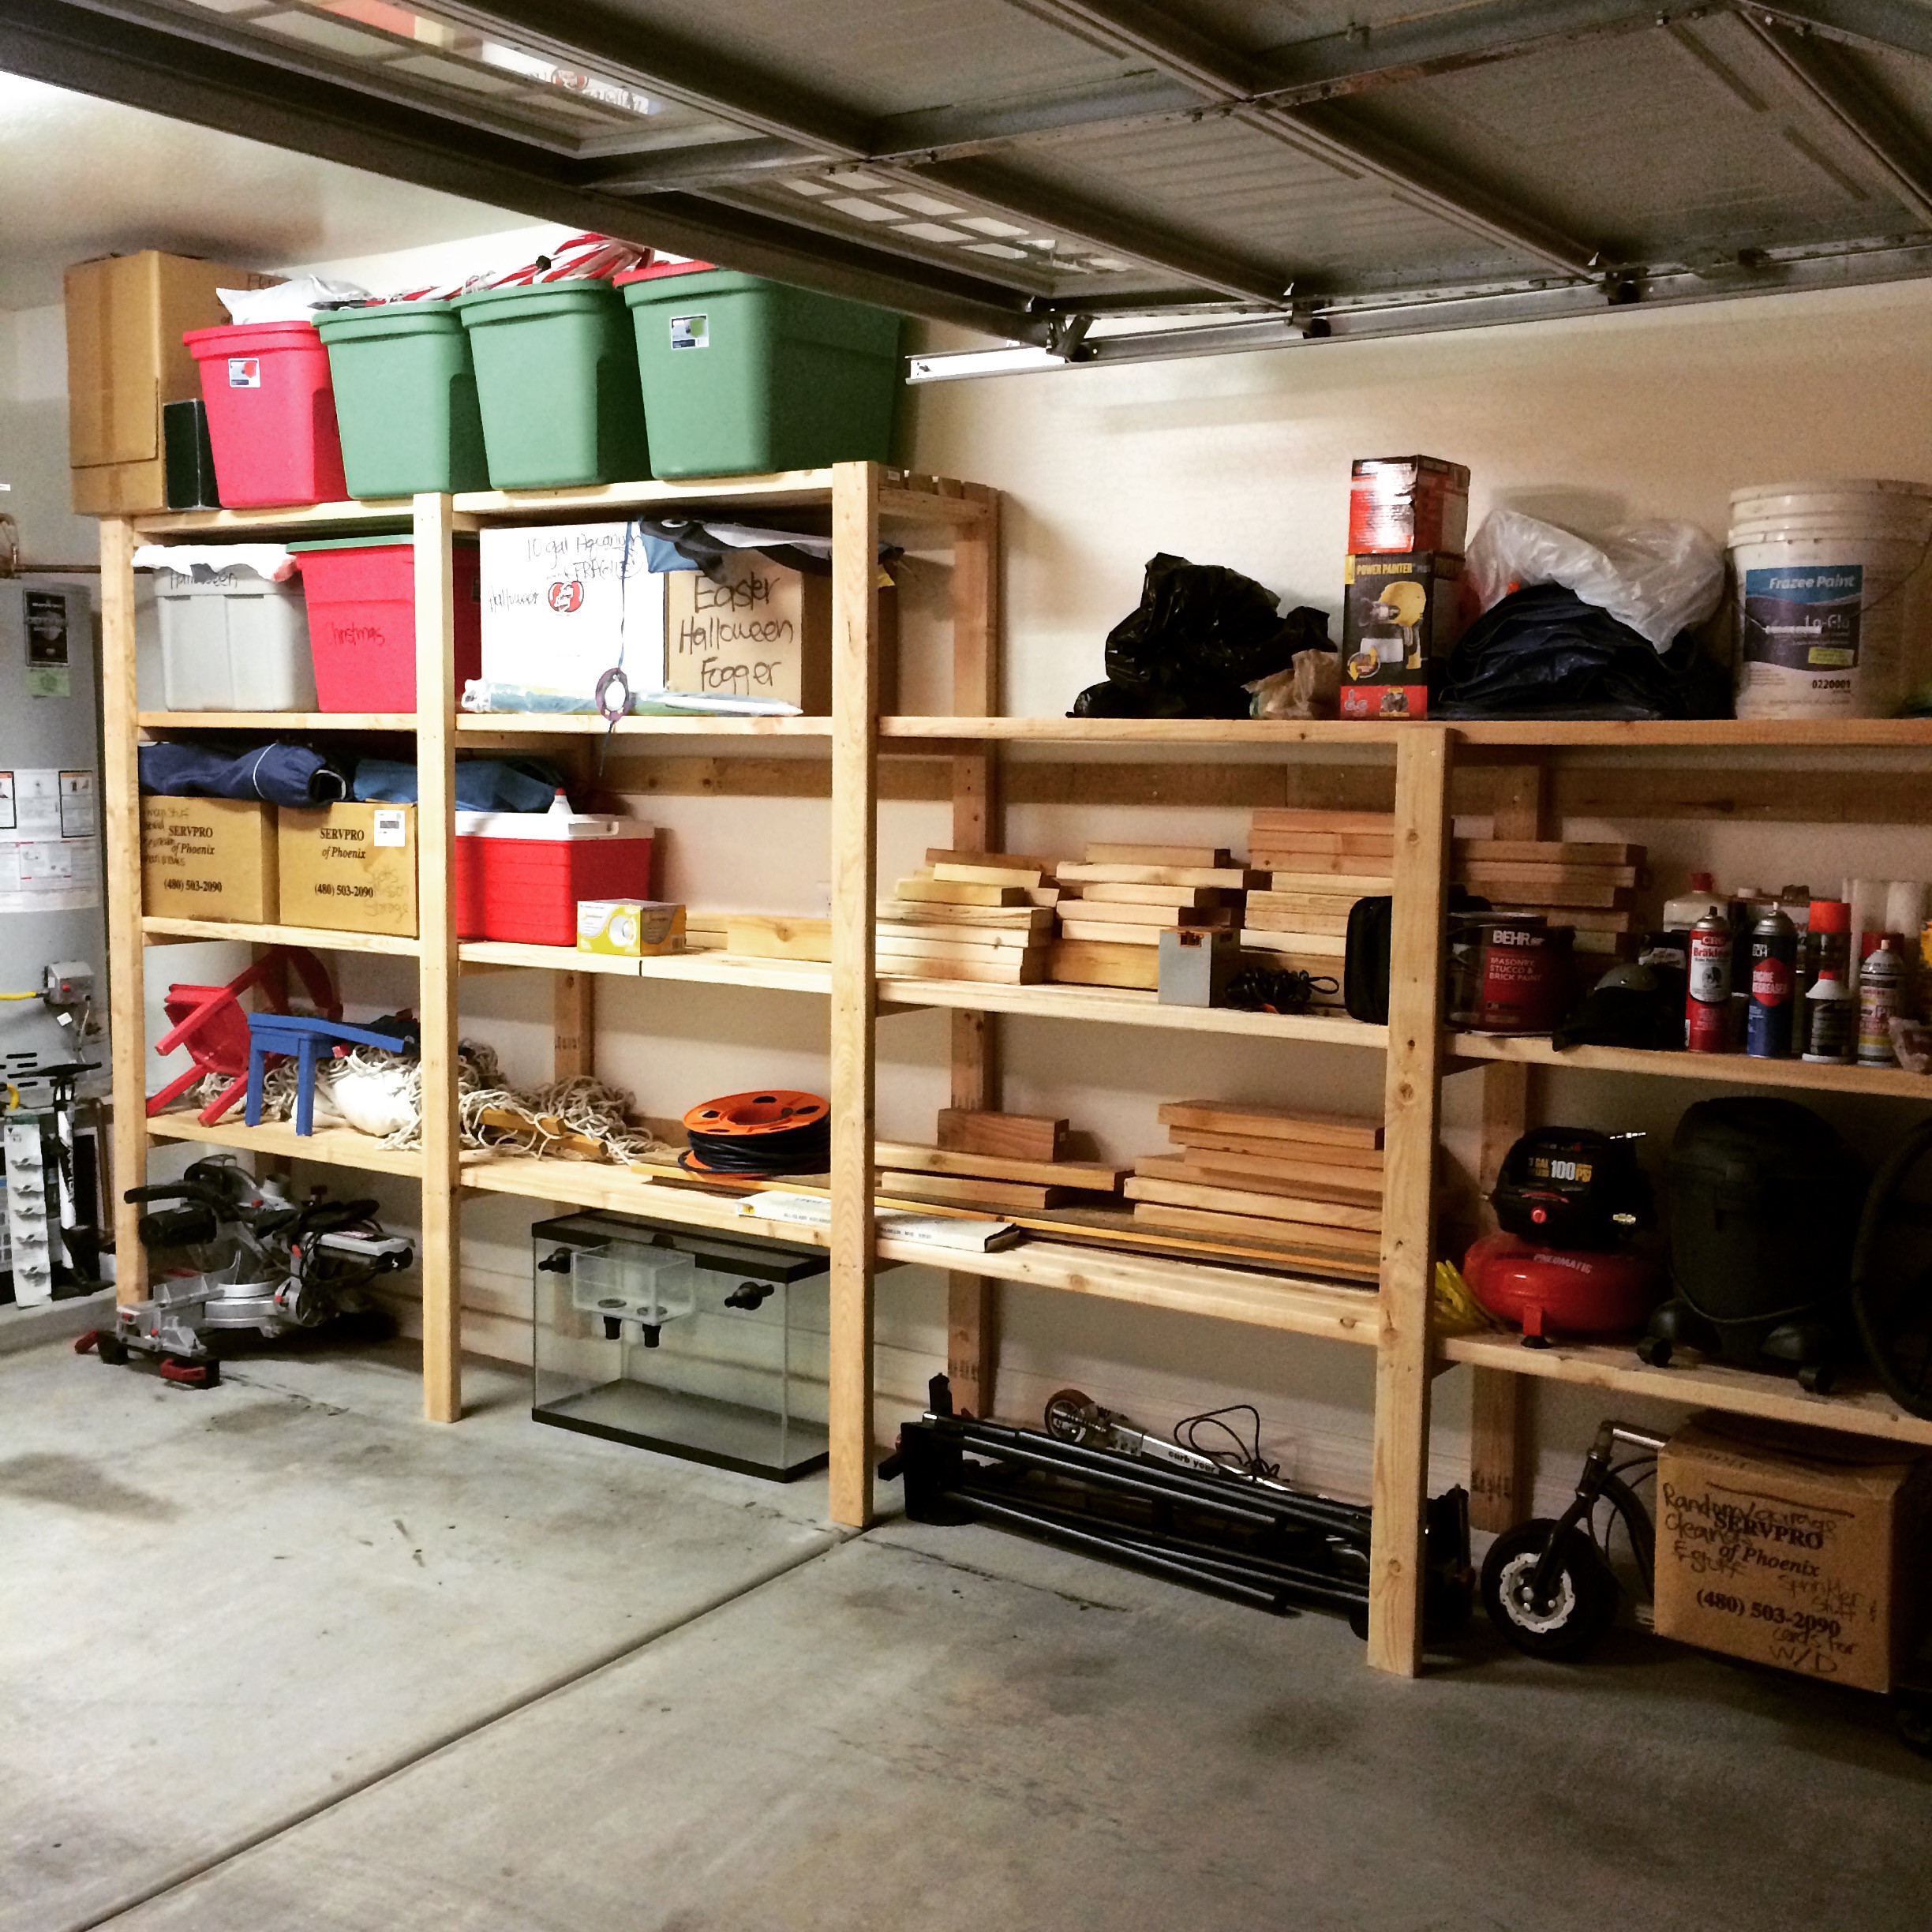 Best ideas about Storage Shelves For Garage
. Save or Pin DIY Garage Storage Favorite Plans Now.